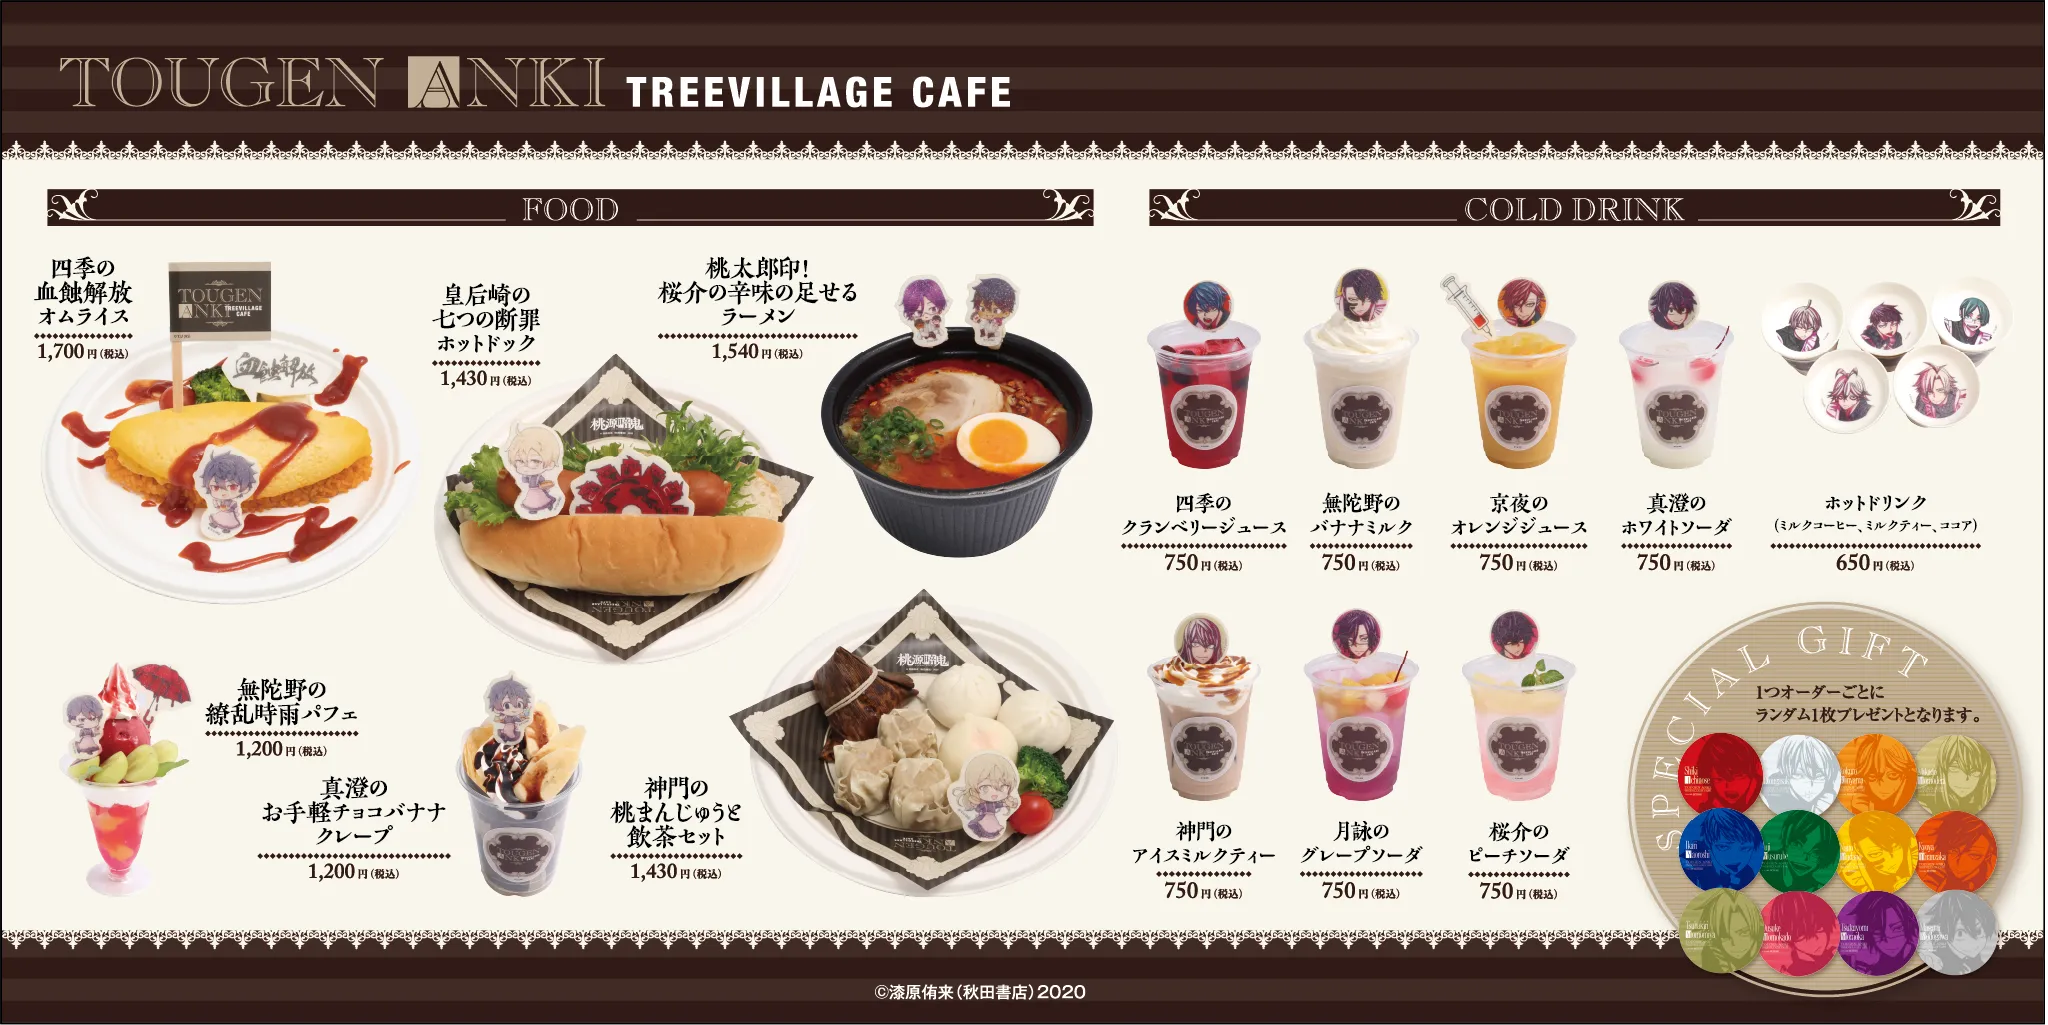 CAFE MENU | 『桃源暗鬼』 Tree Village Cafe (ツリービレッジカフェ)